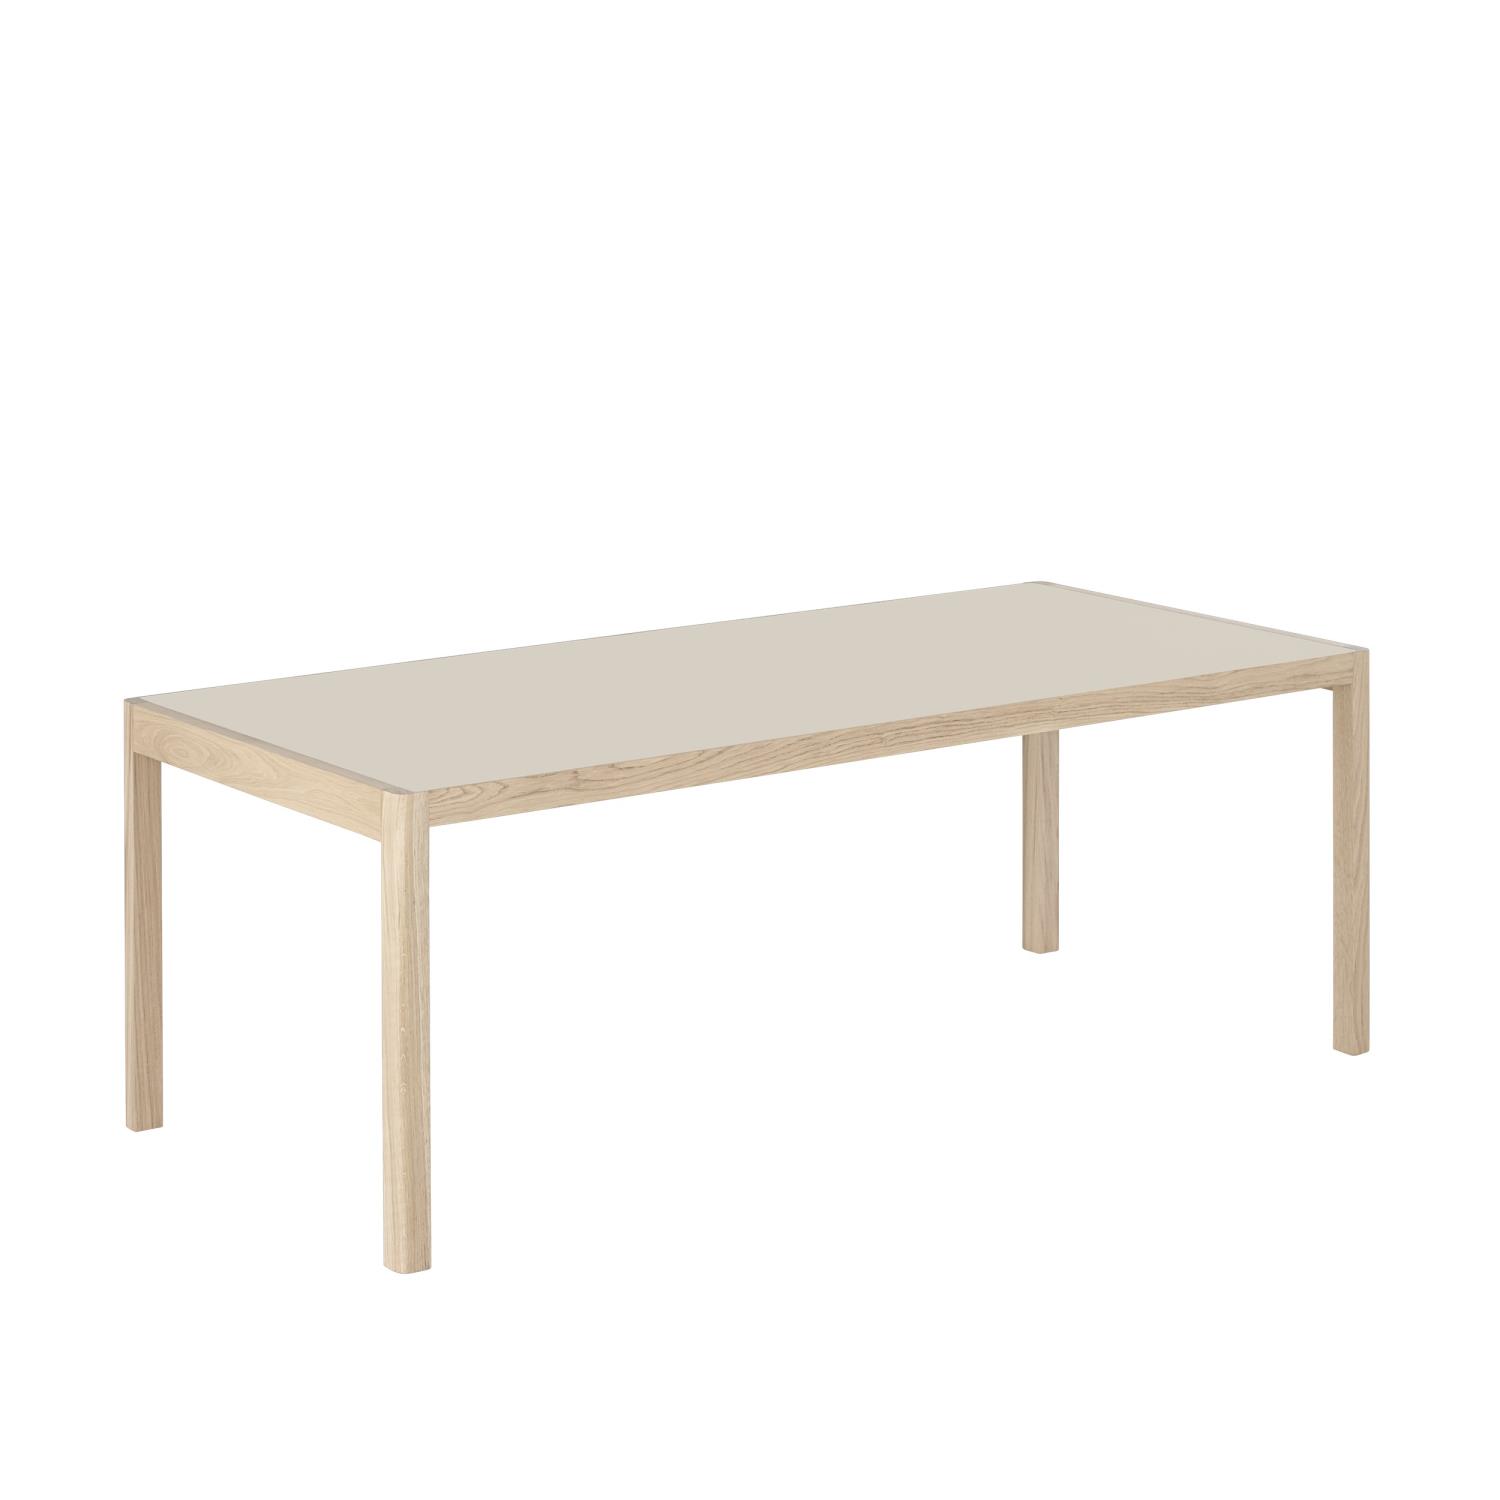 Muuto - Workshop Table - 200x92 - Warm Grey Linoleum and Oak